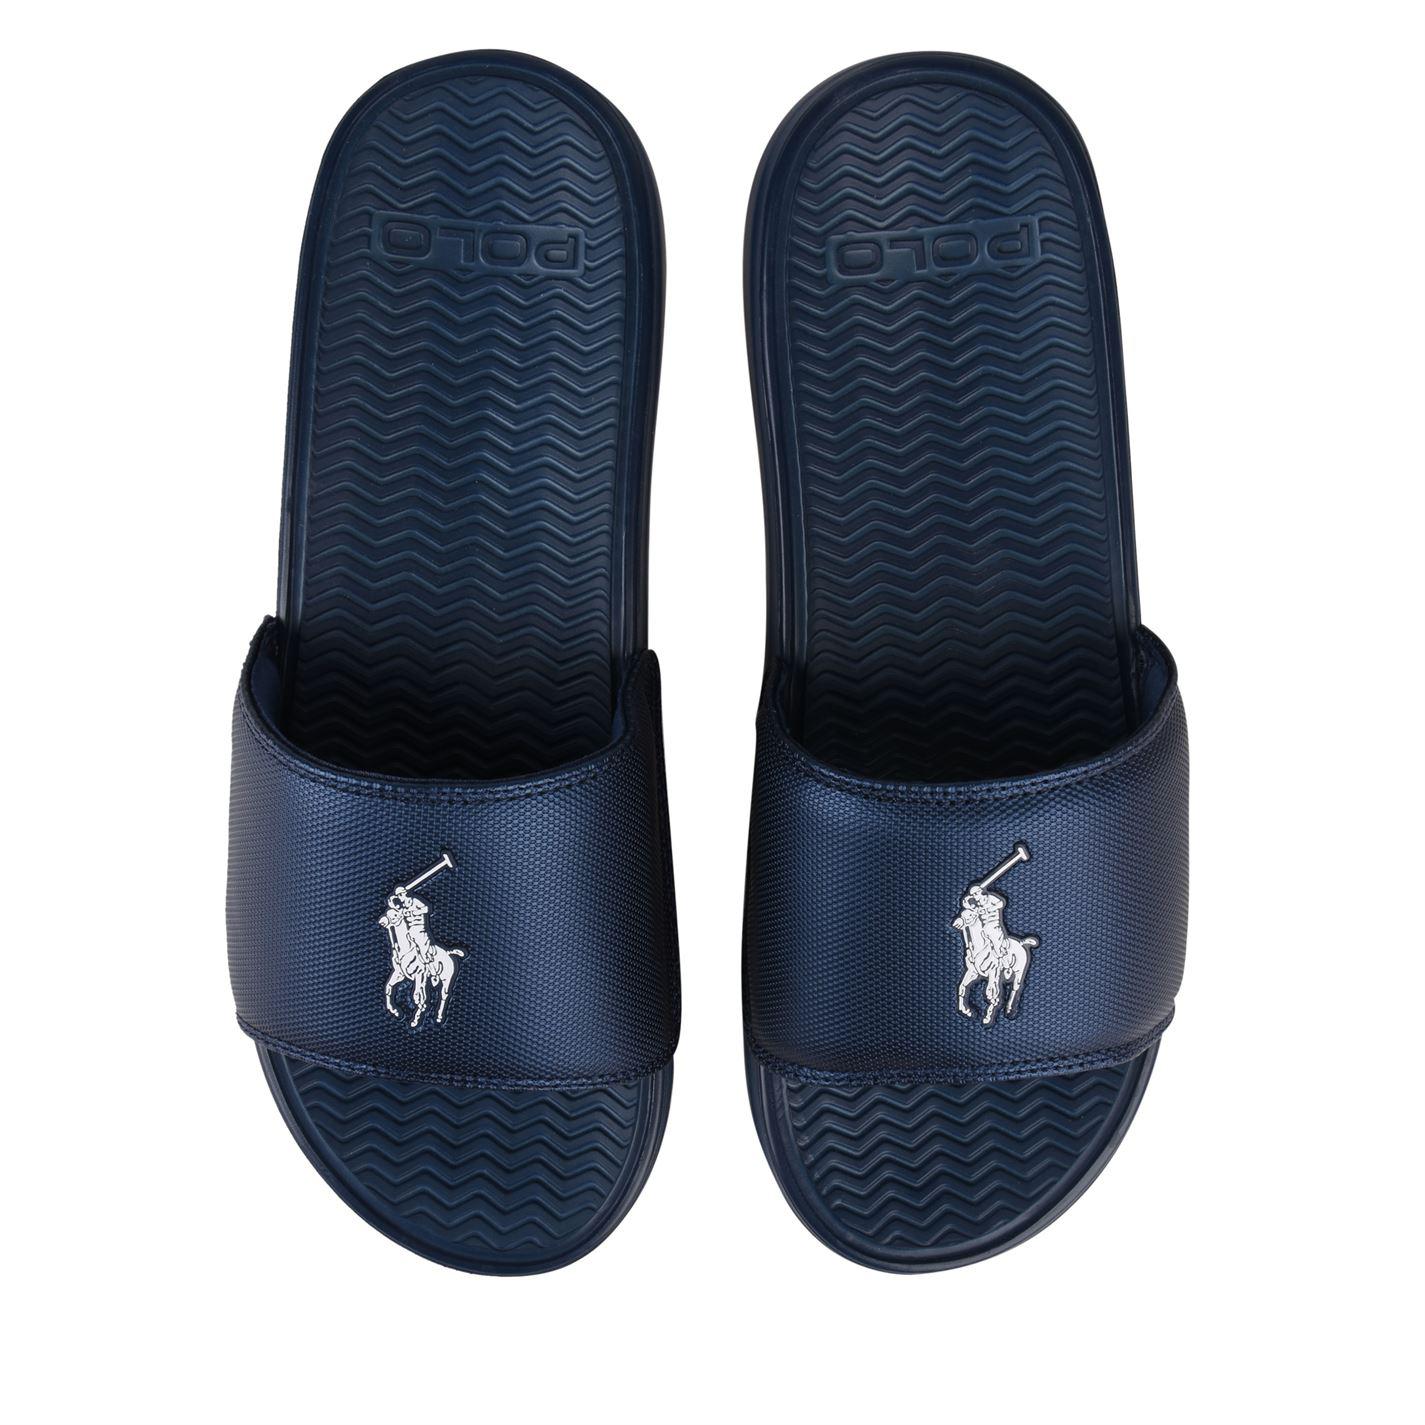 Polo Ralph Lauren Rodwell Sliders in Blue for Men - Lyst